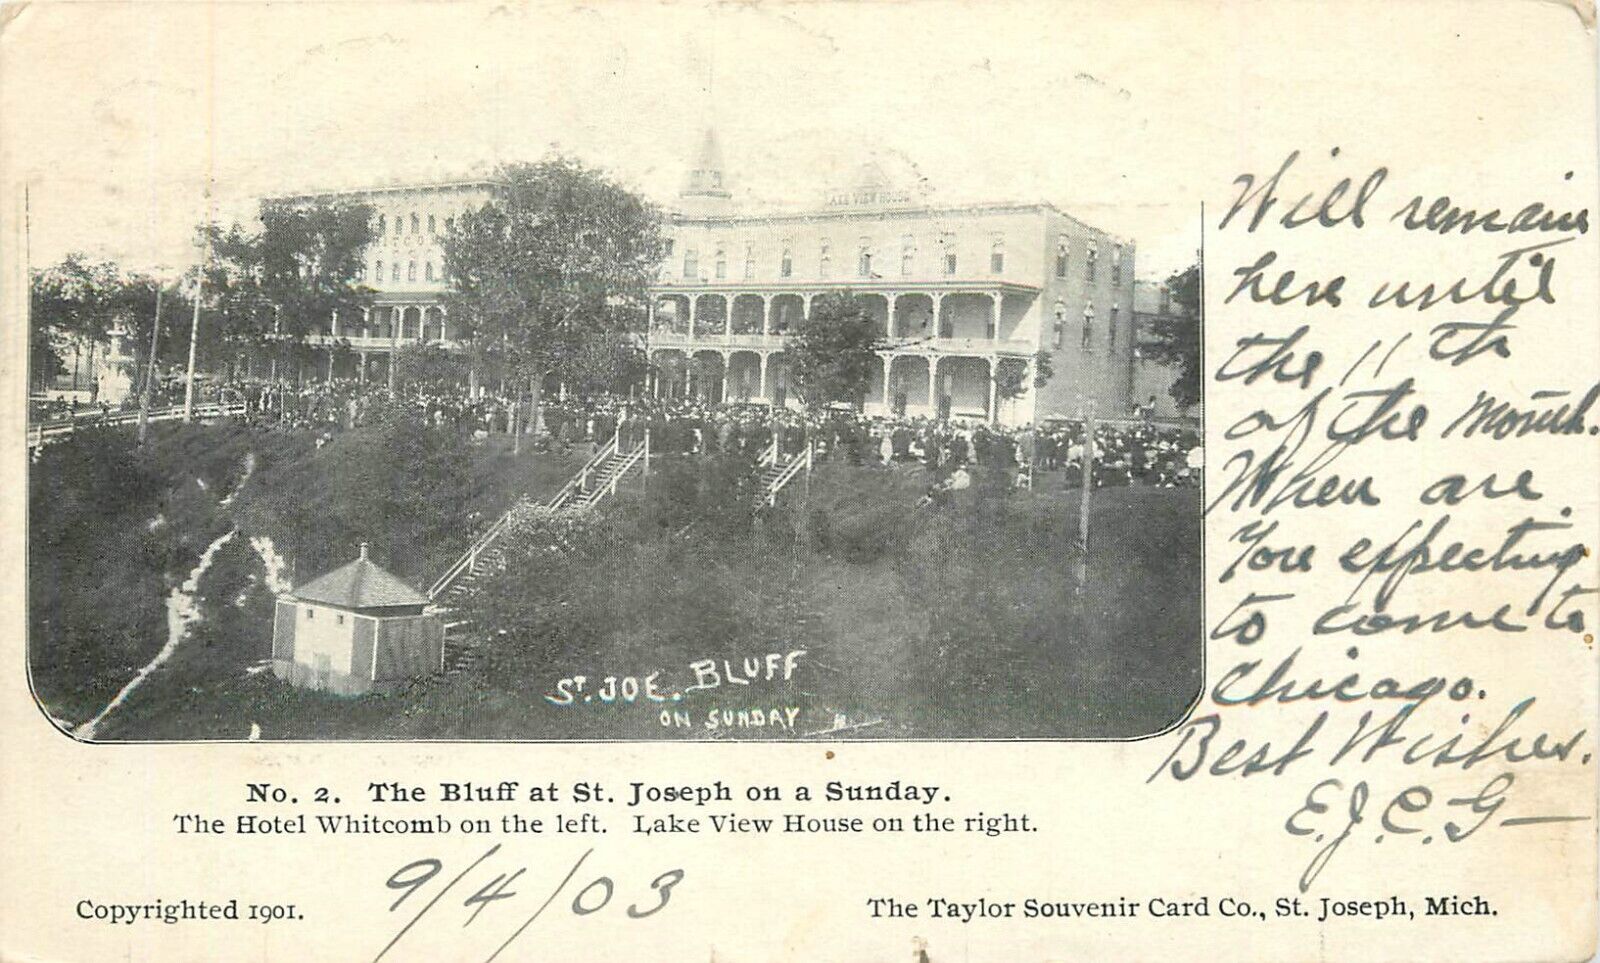 1903 Hotel Whitcomb and the Bluff at St Joseph, Michigan Postcard